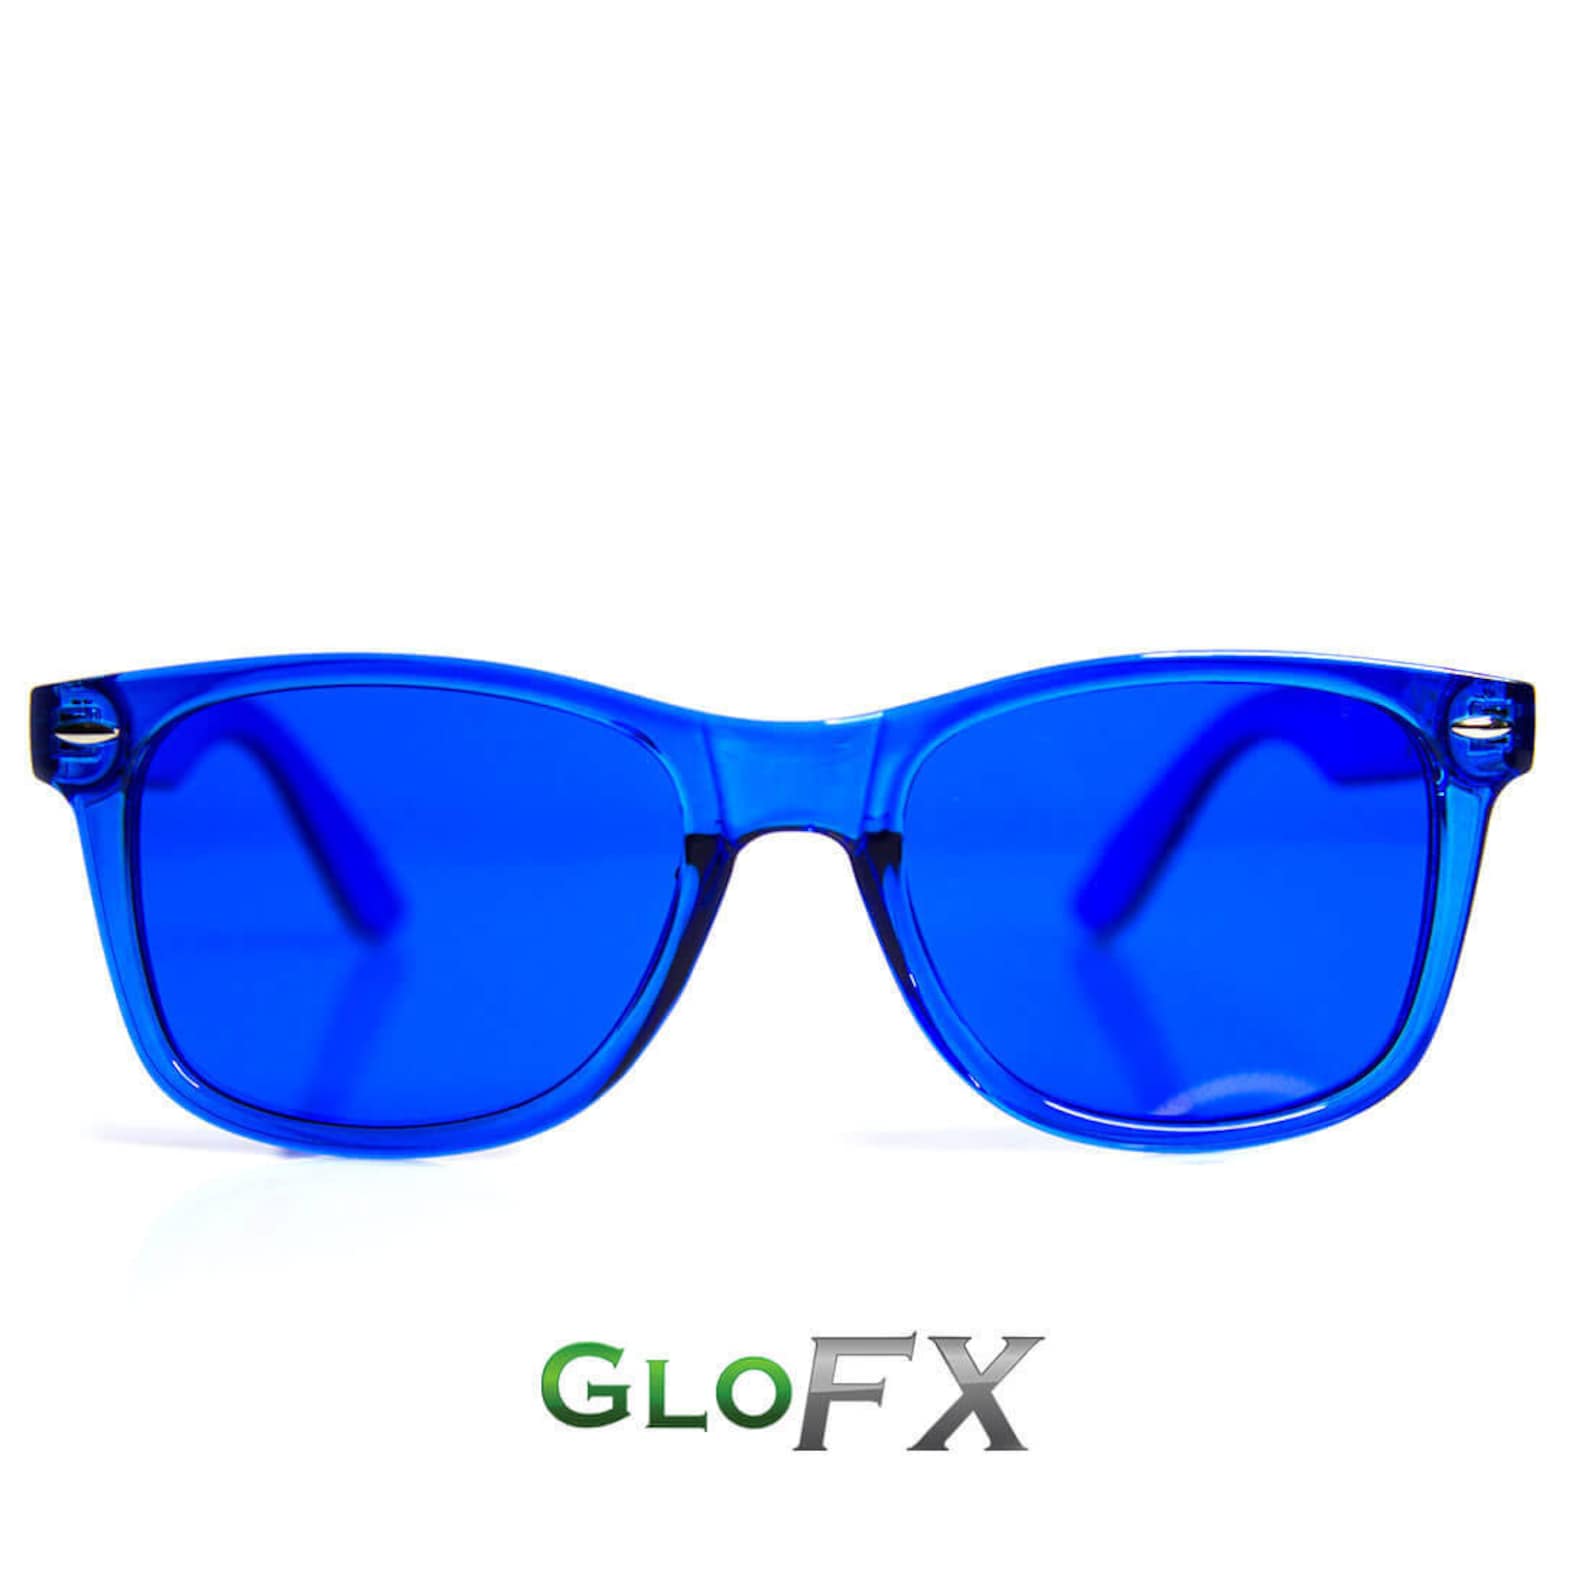 Blue sunglasses. Arizona очки синие мужские. GLOFX очки. Очки солнцезащитные 7275 Blue. Солнечные очки синие.